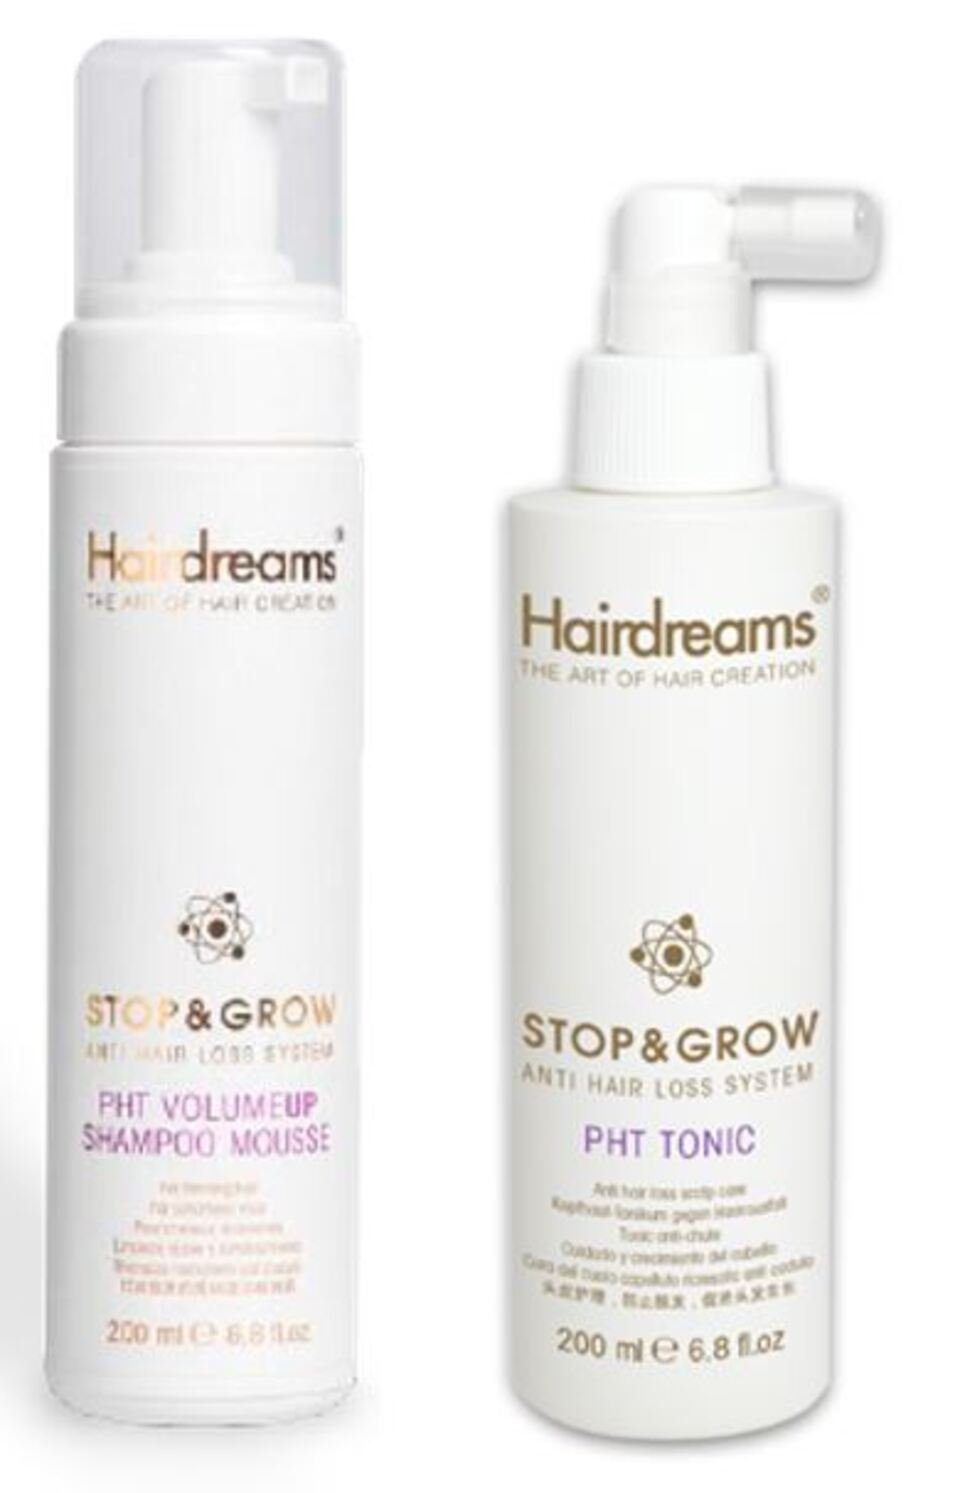 Hairdreams Haarpflege-Set Hairdreams Stop & Grow, Set, 2-tlg., Pht Volumeup Shampoo Mousse + Pht Tonic, Haarausfall, Haarwachtum | Haarpflege-Sets